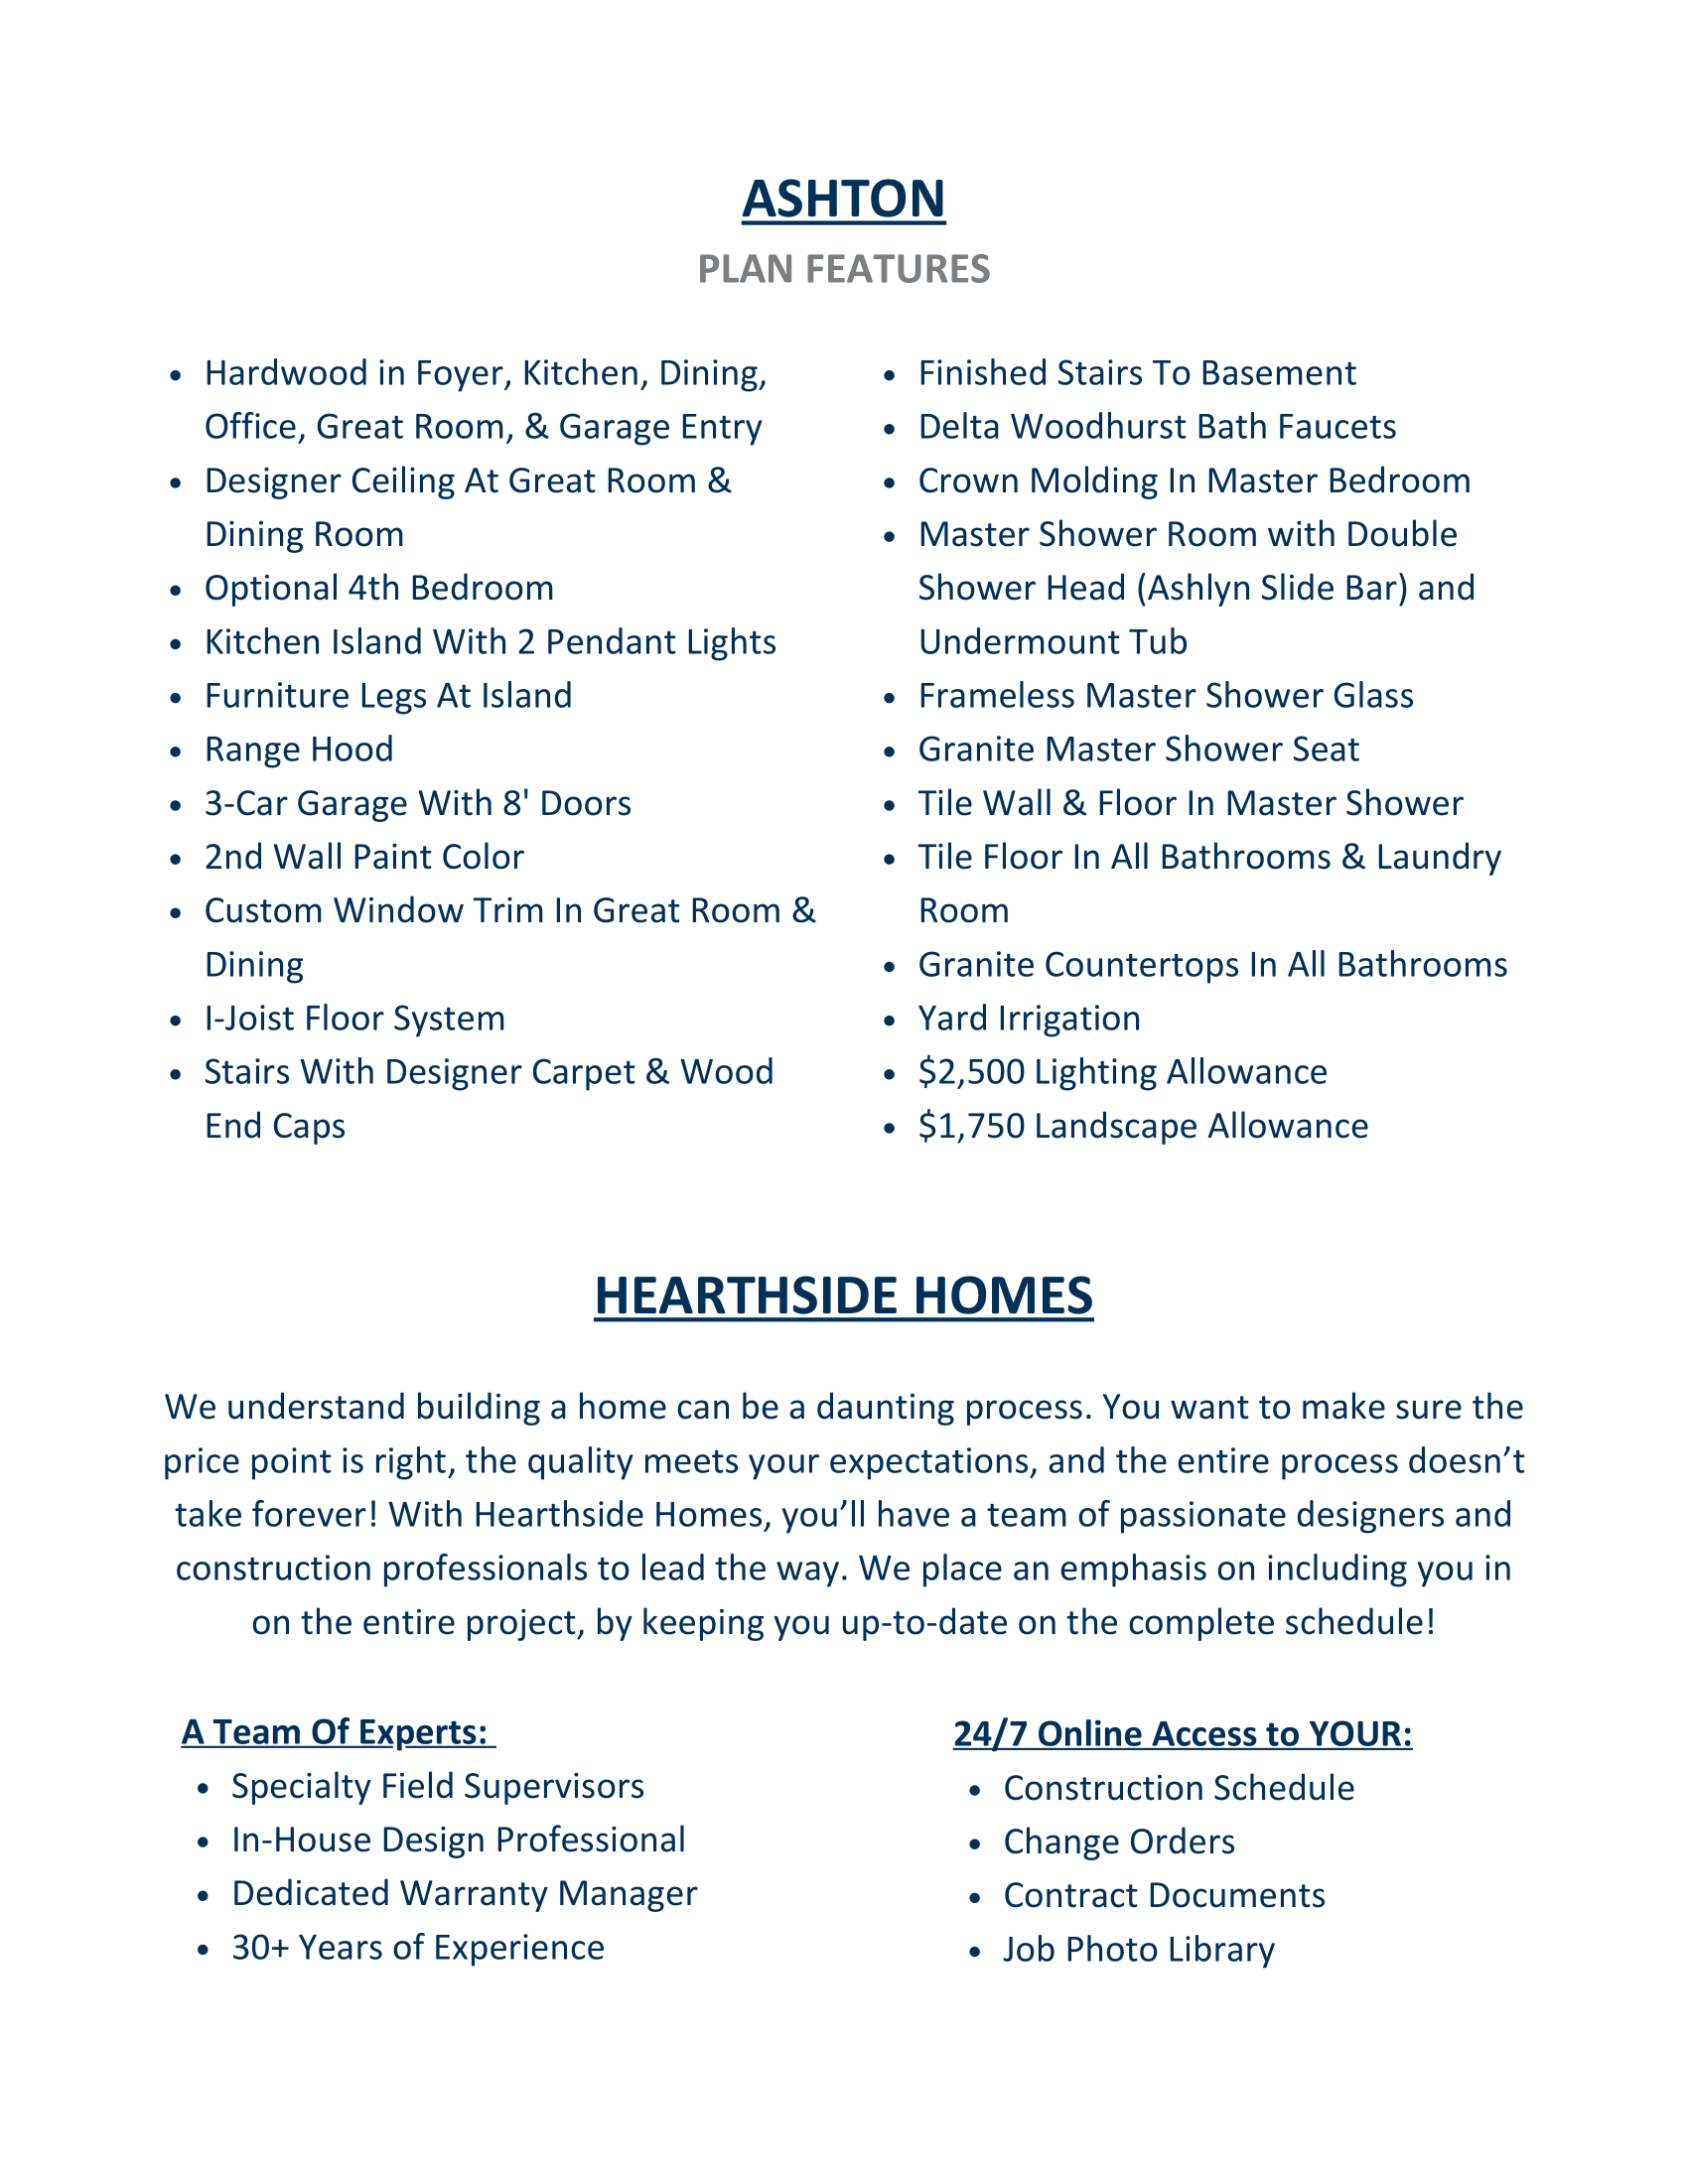 Ashton Back - Hearthside Homes - Ashton Revised May 4 2021-1